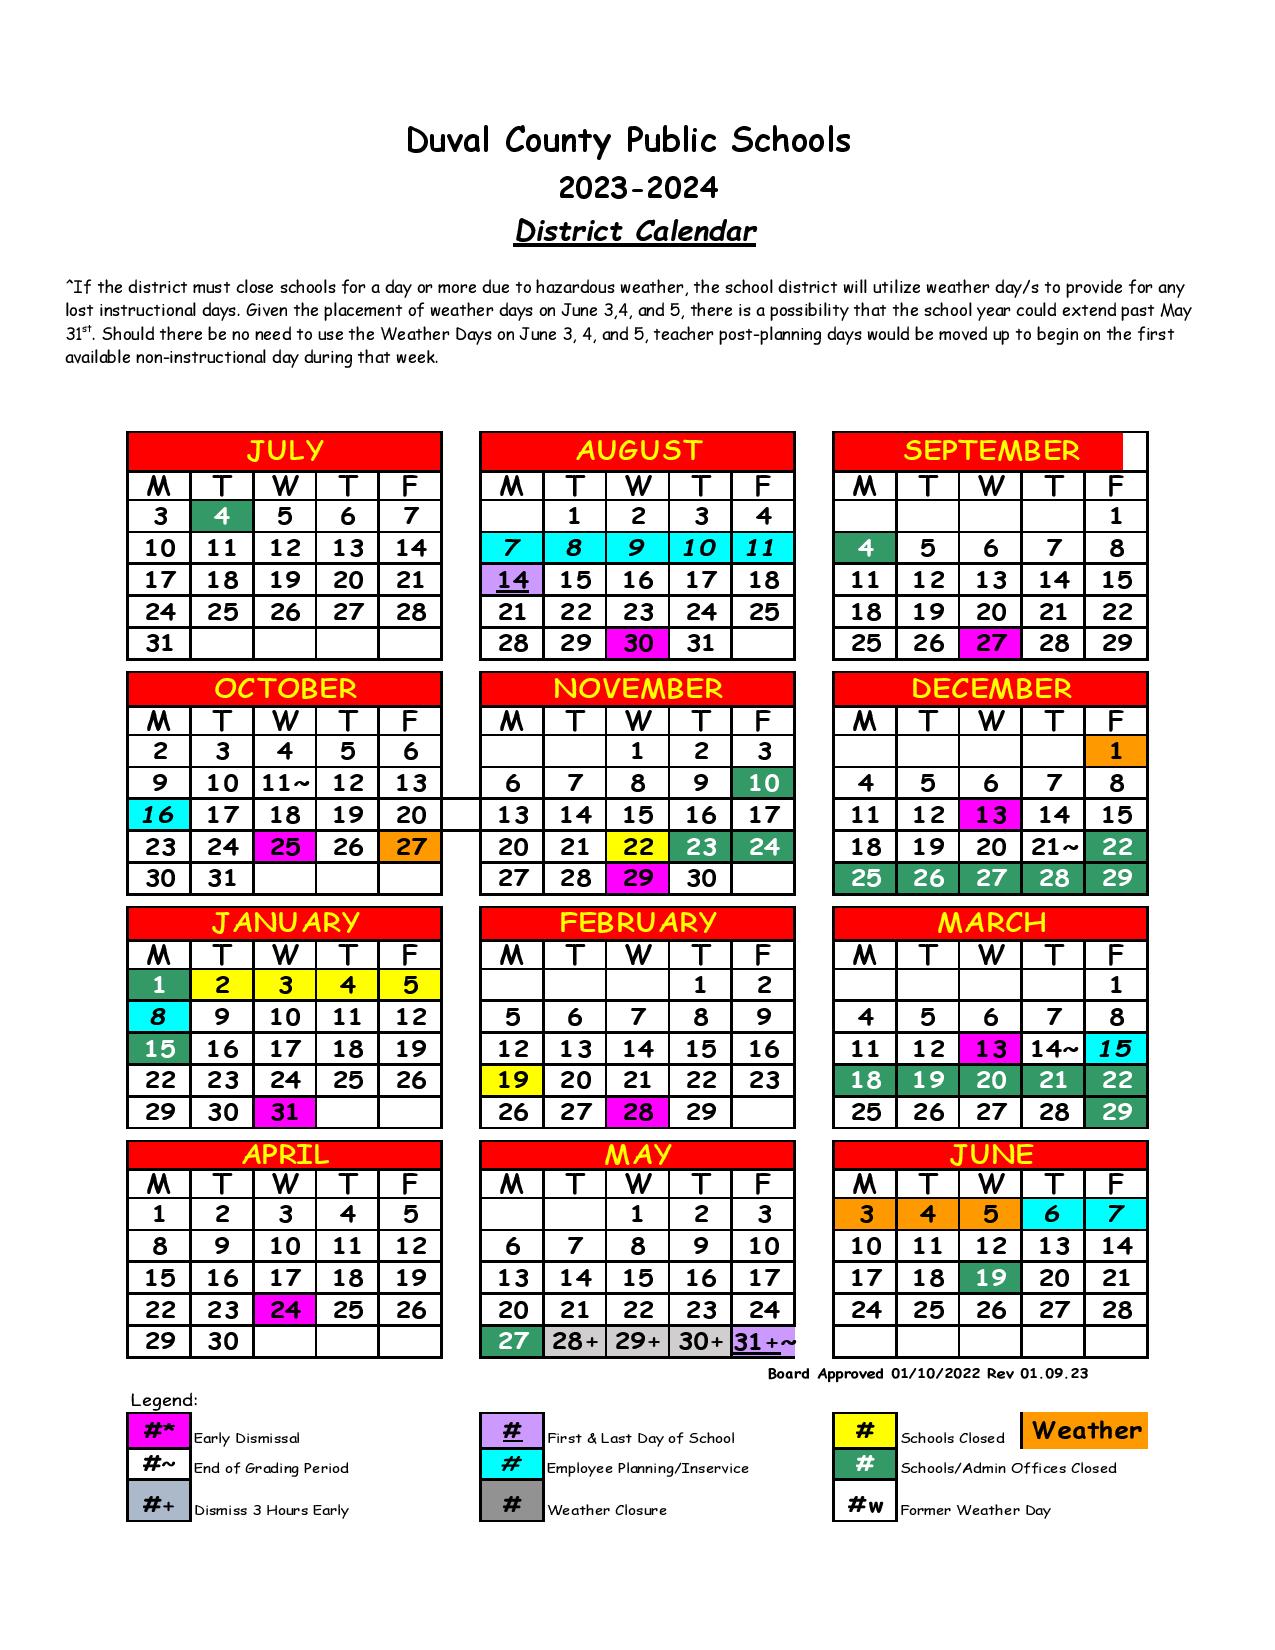 Duval County Public Schools Calendar 2023 2024 Holiday Breaks 